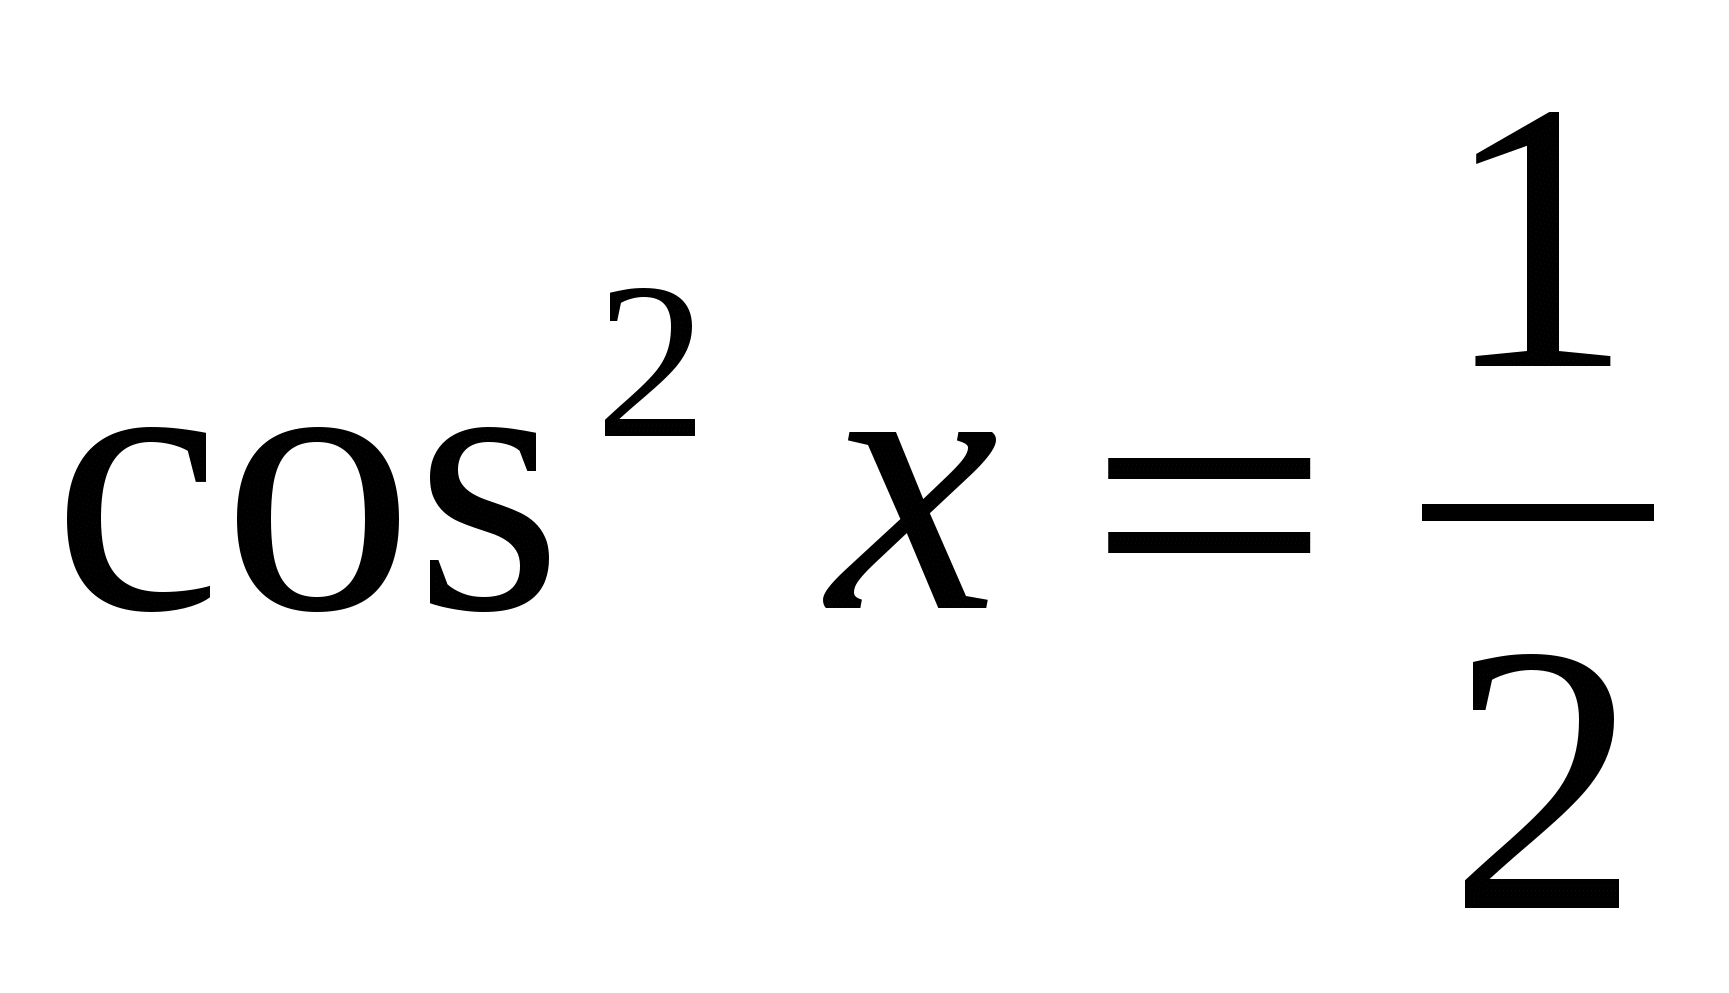 1 cosx cos2x 0. 1-Cos2x. Cos2x=1/2. 2соs2x+1. 2cos^2-1.